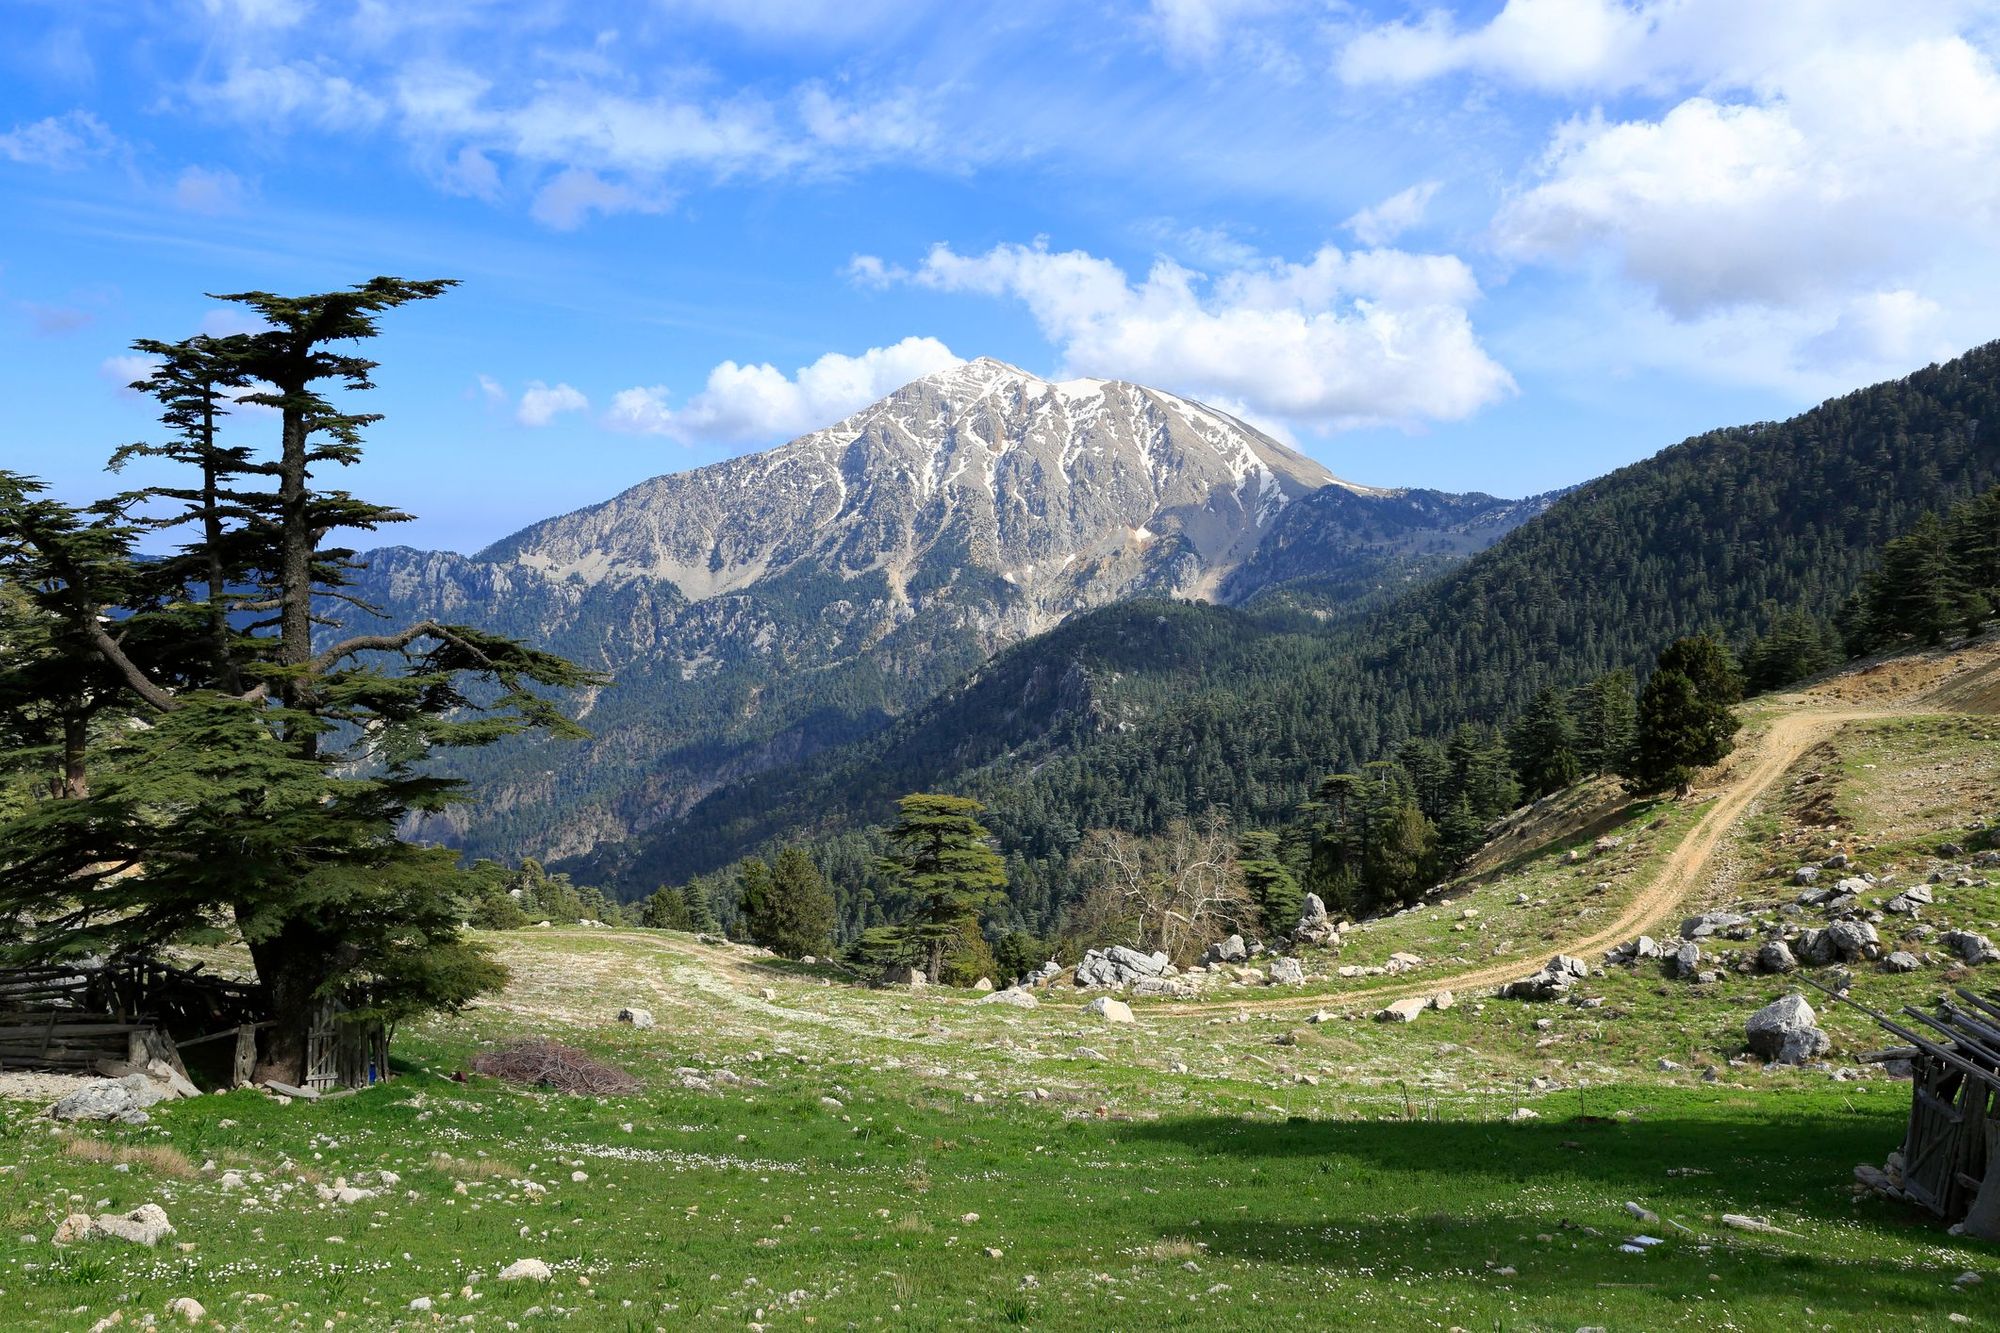 The summit of Mount Olympos (known as Mount Tahtalı) in Turkey.